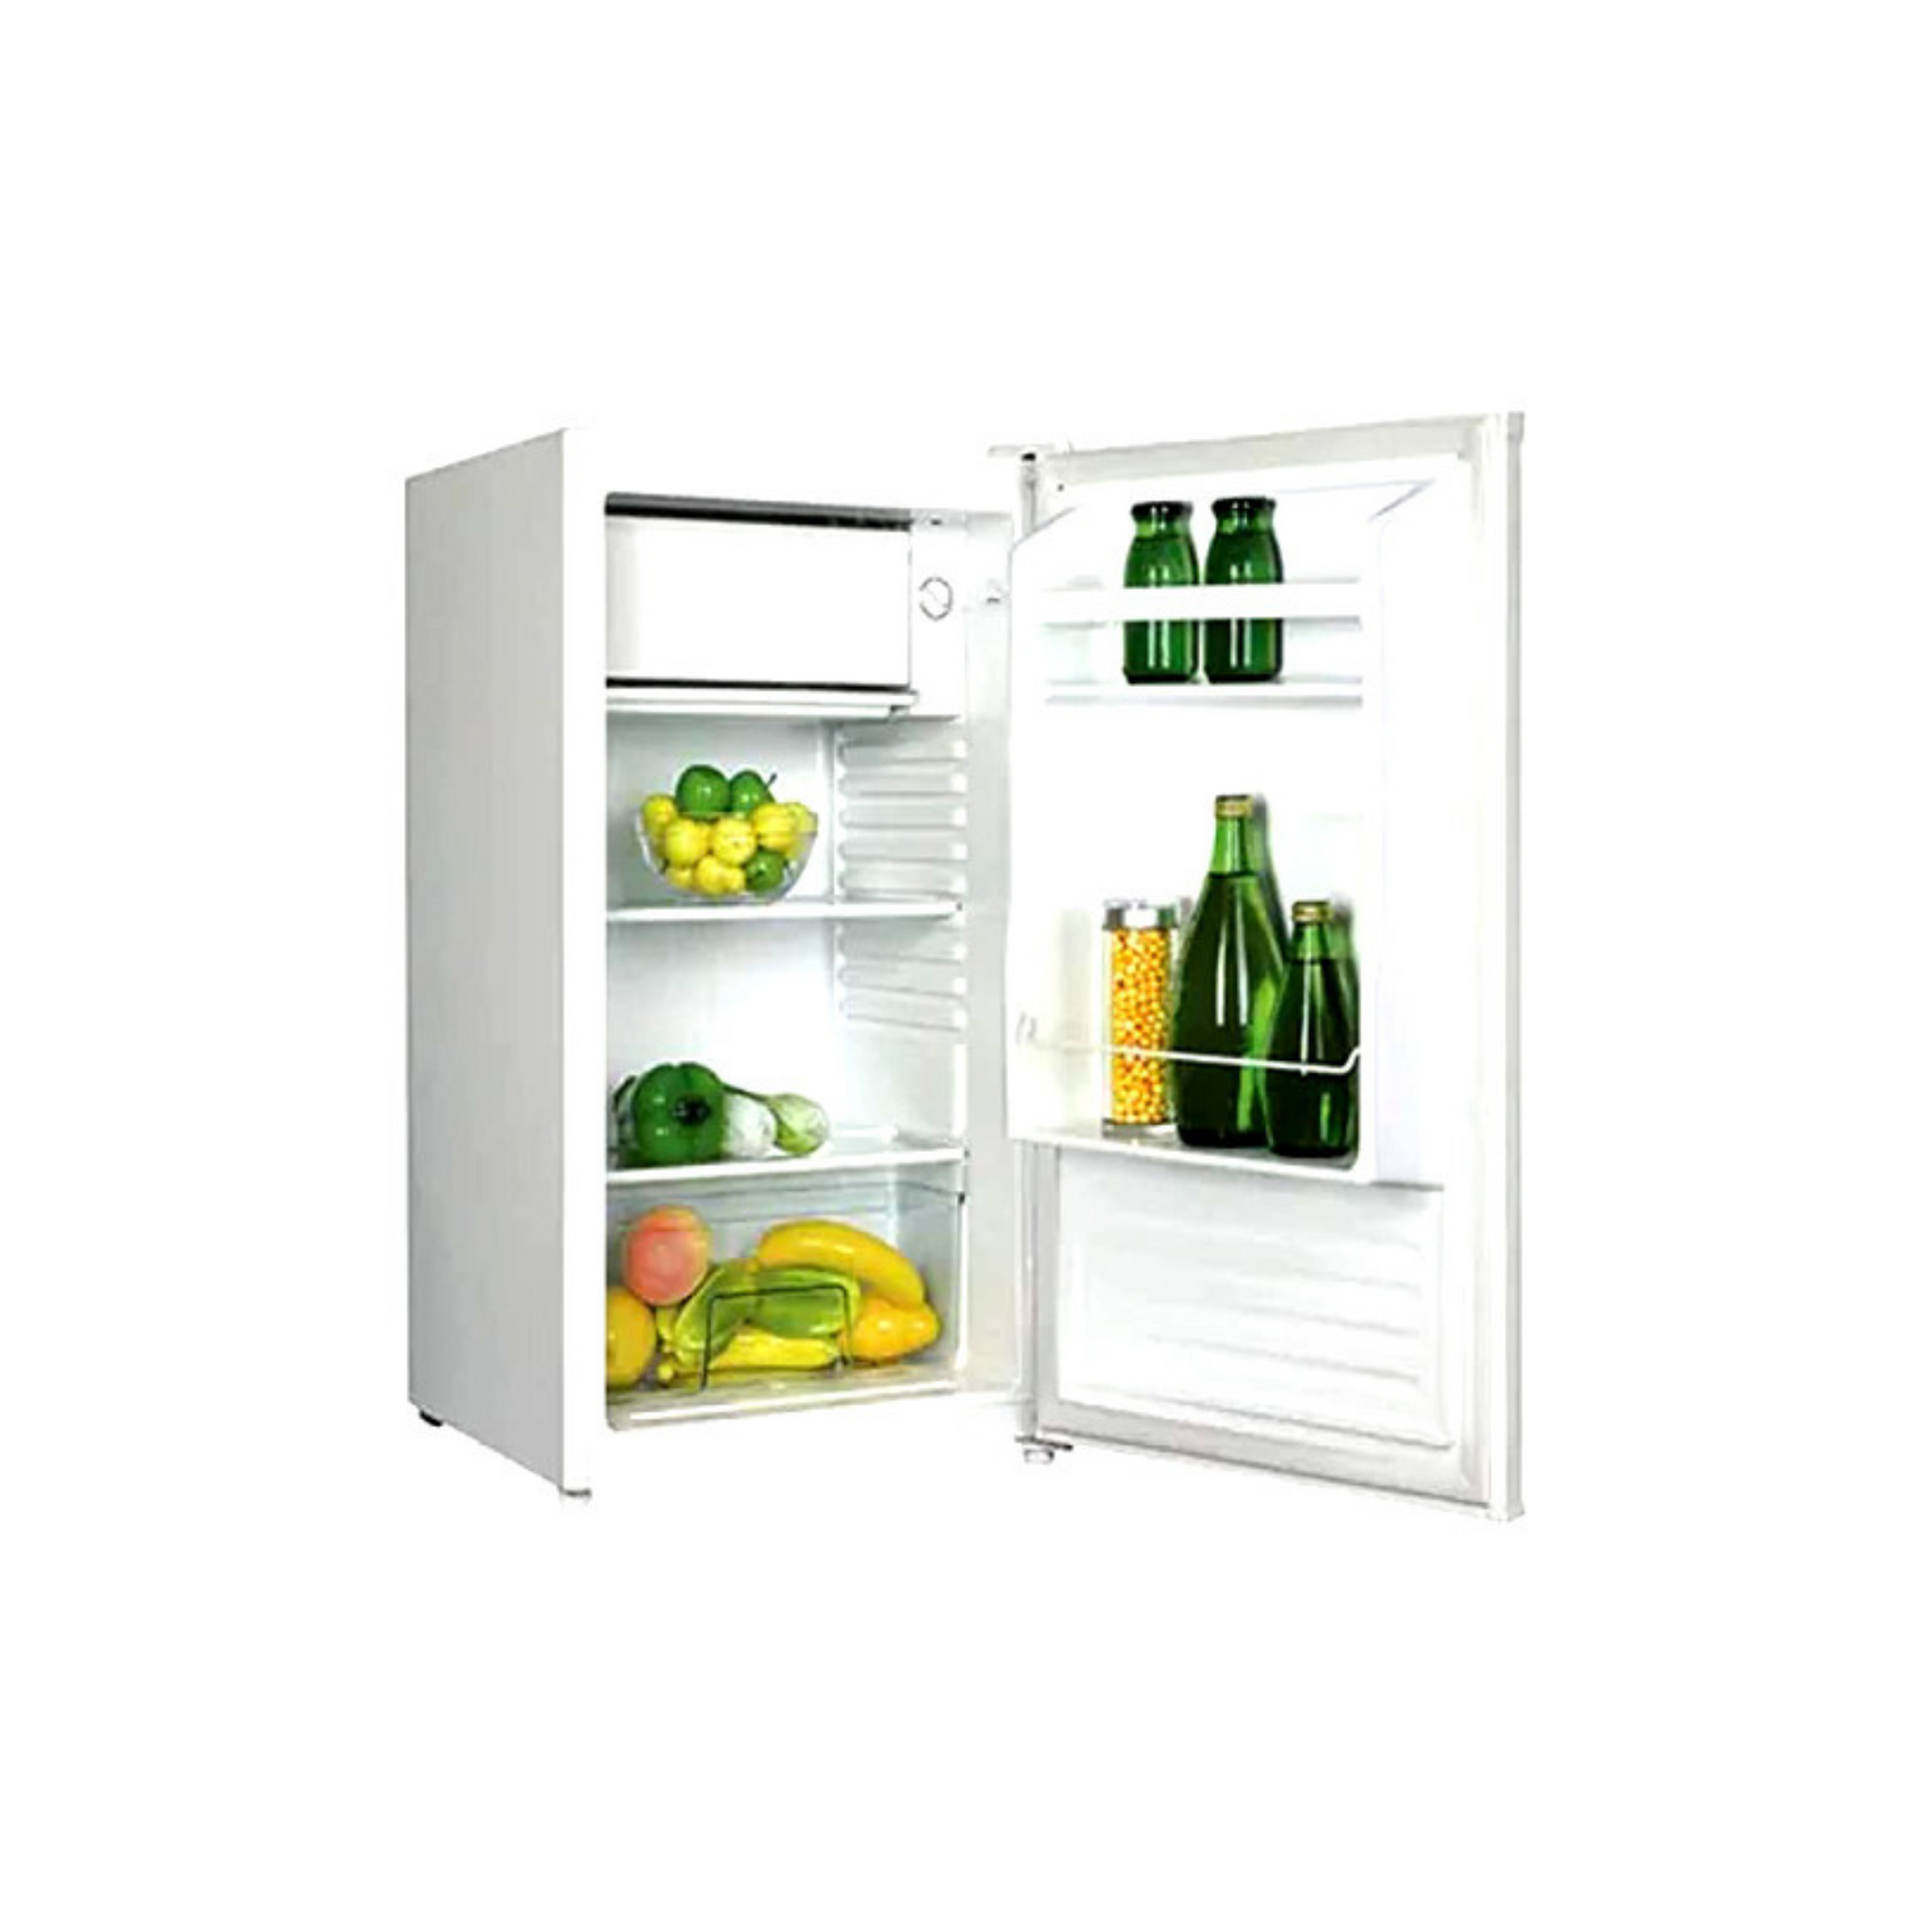 Aftron 120L Single Door Refrigerator, AFR535H